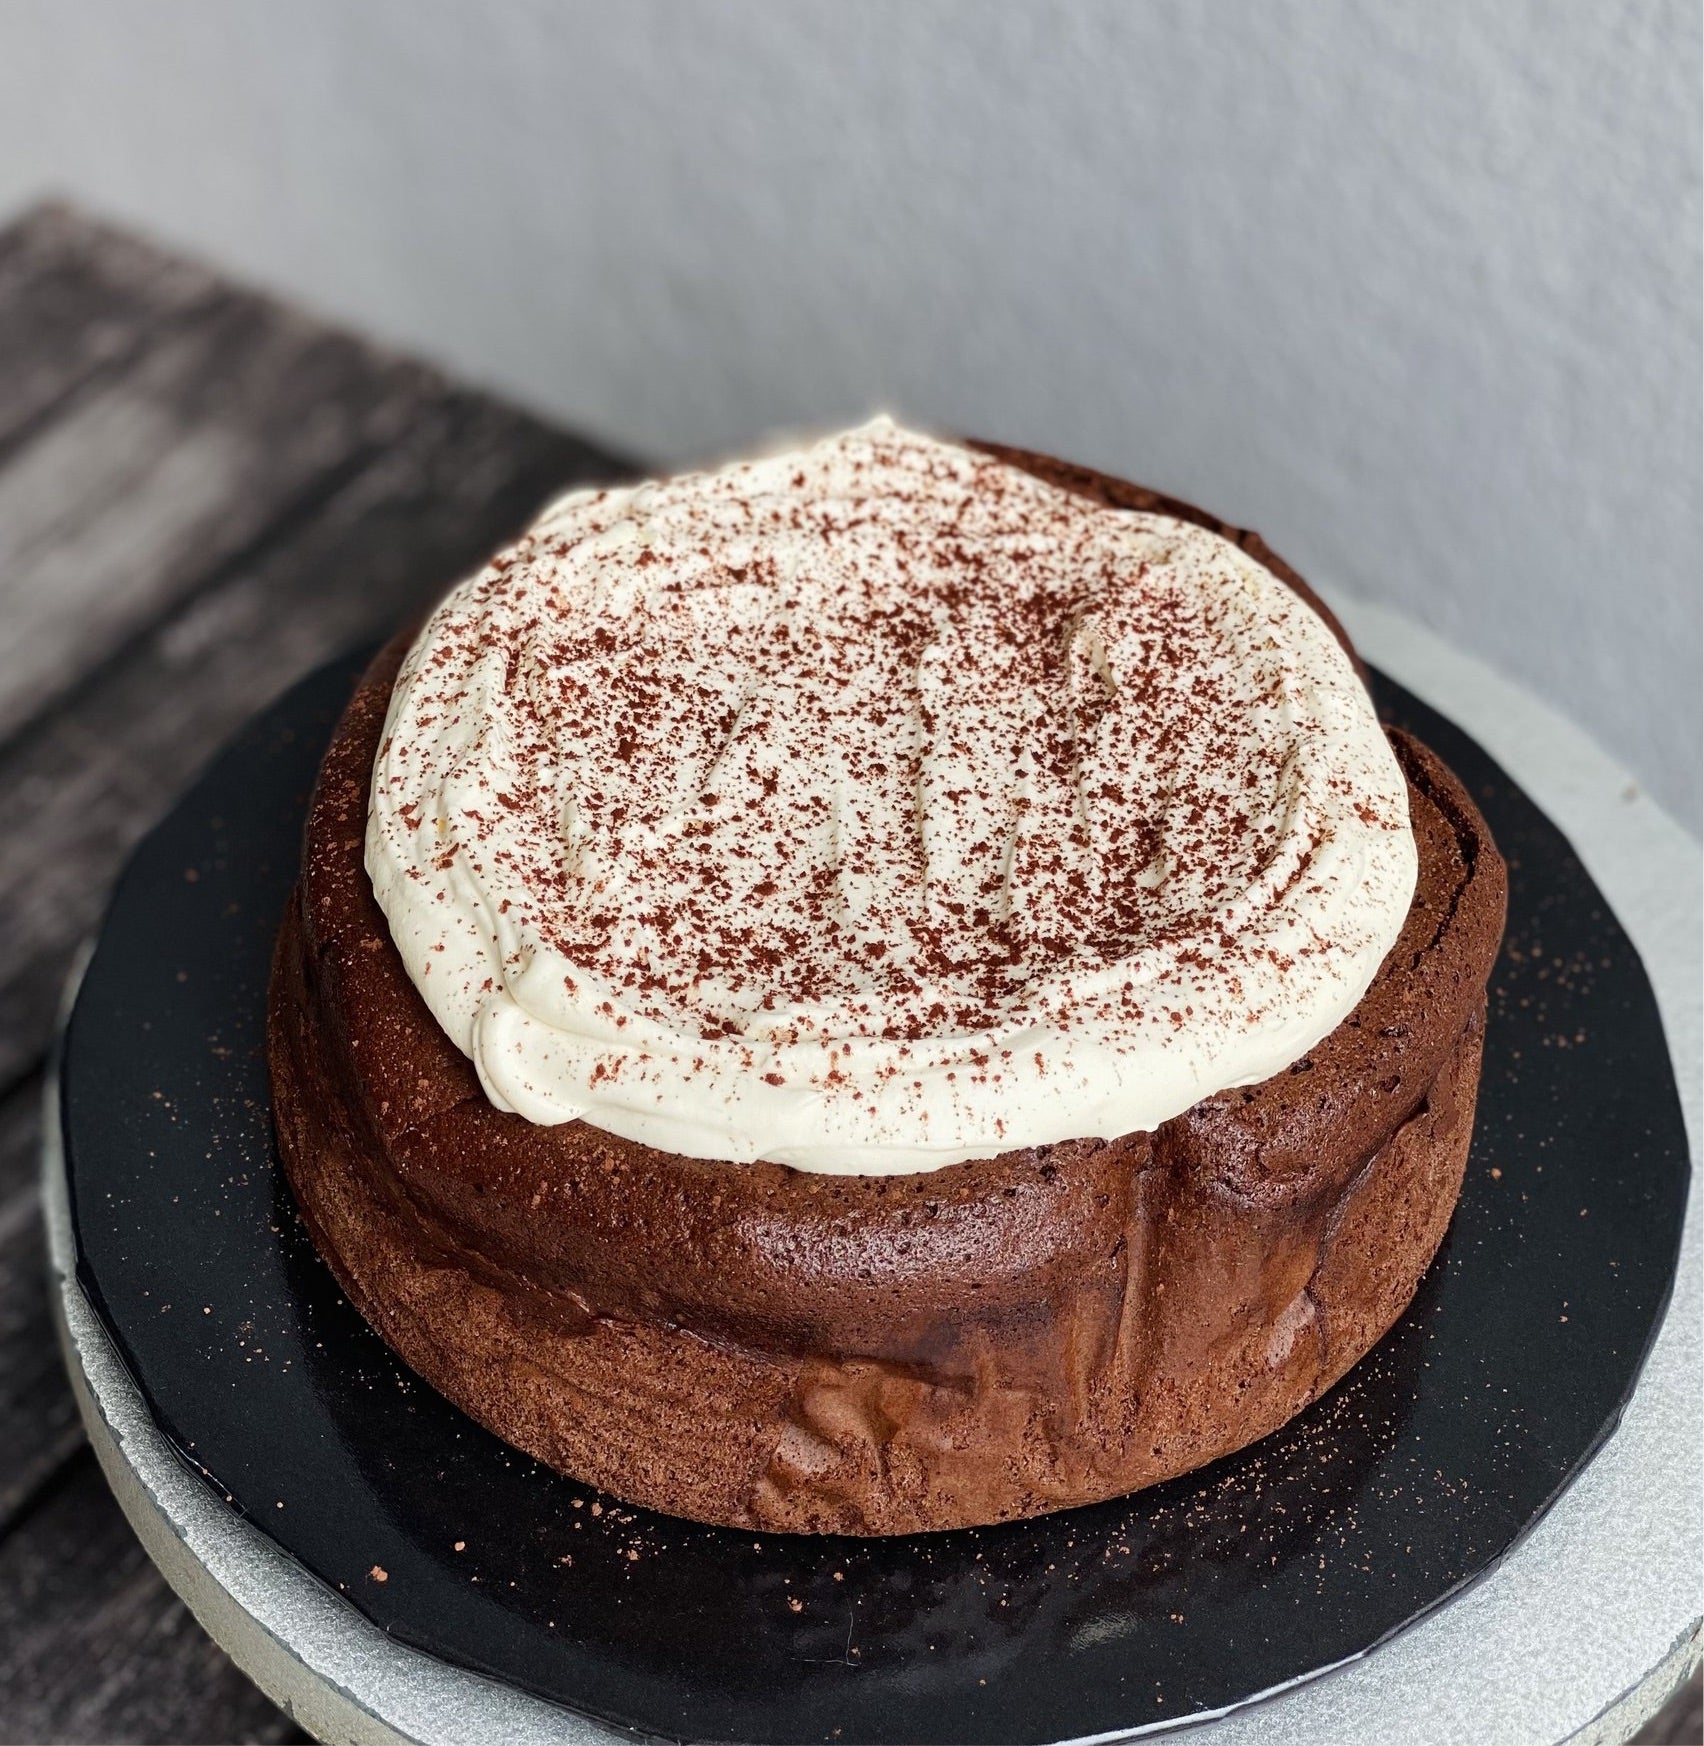 Sour Cream Chocolate Cake | Recipe | Nigella lawson recipes, Sour cream chocolate  cake, Nigella lawson cake recipes